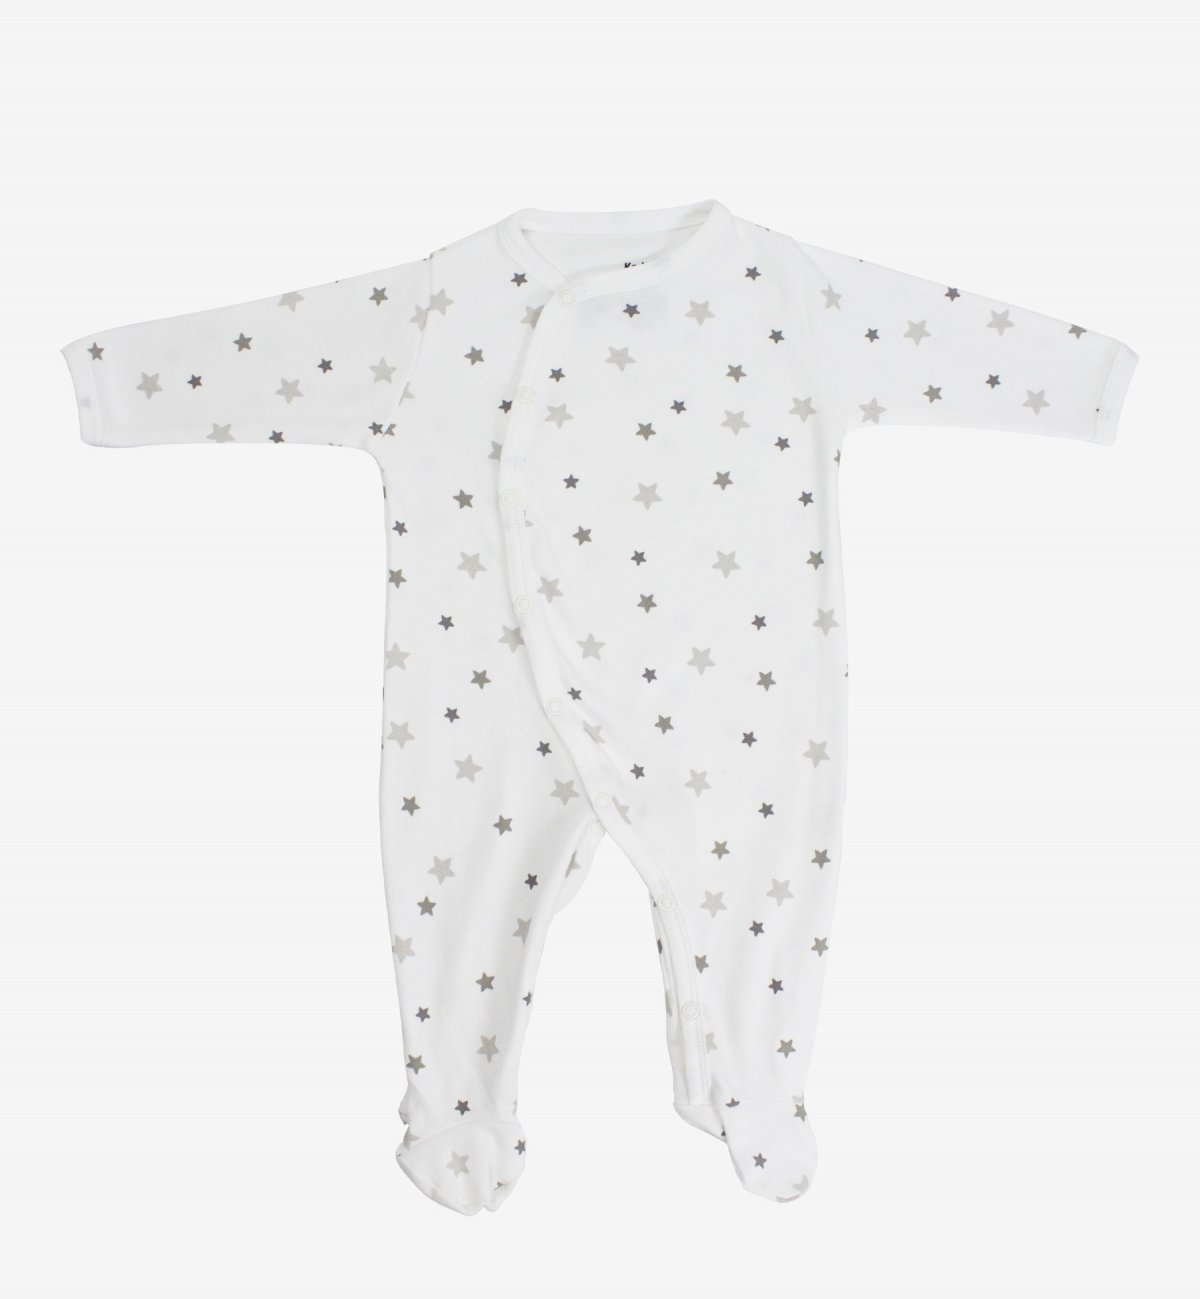 Newborn gift set organic cotton pyjamas, bodysuit, sleeping bag and comforter